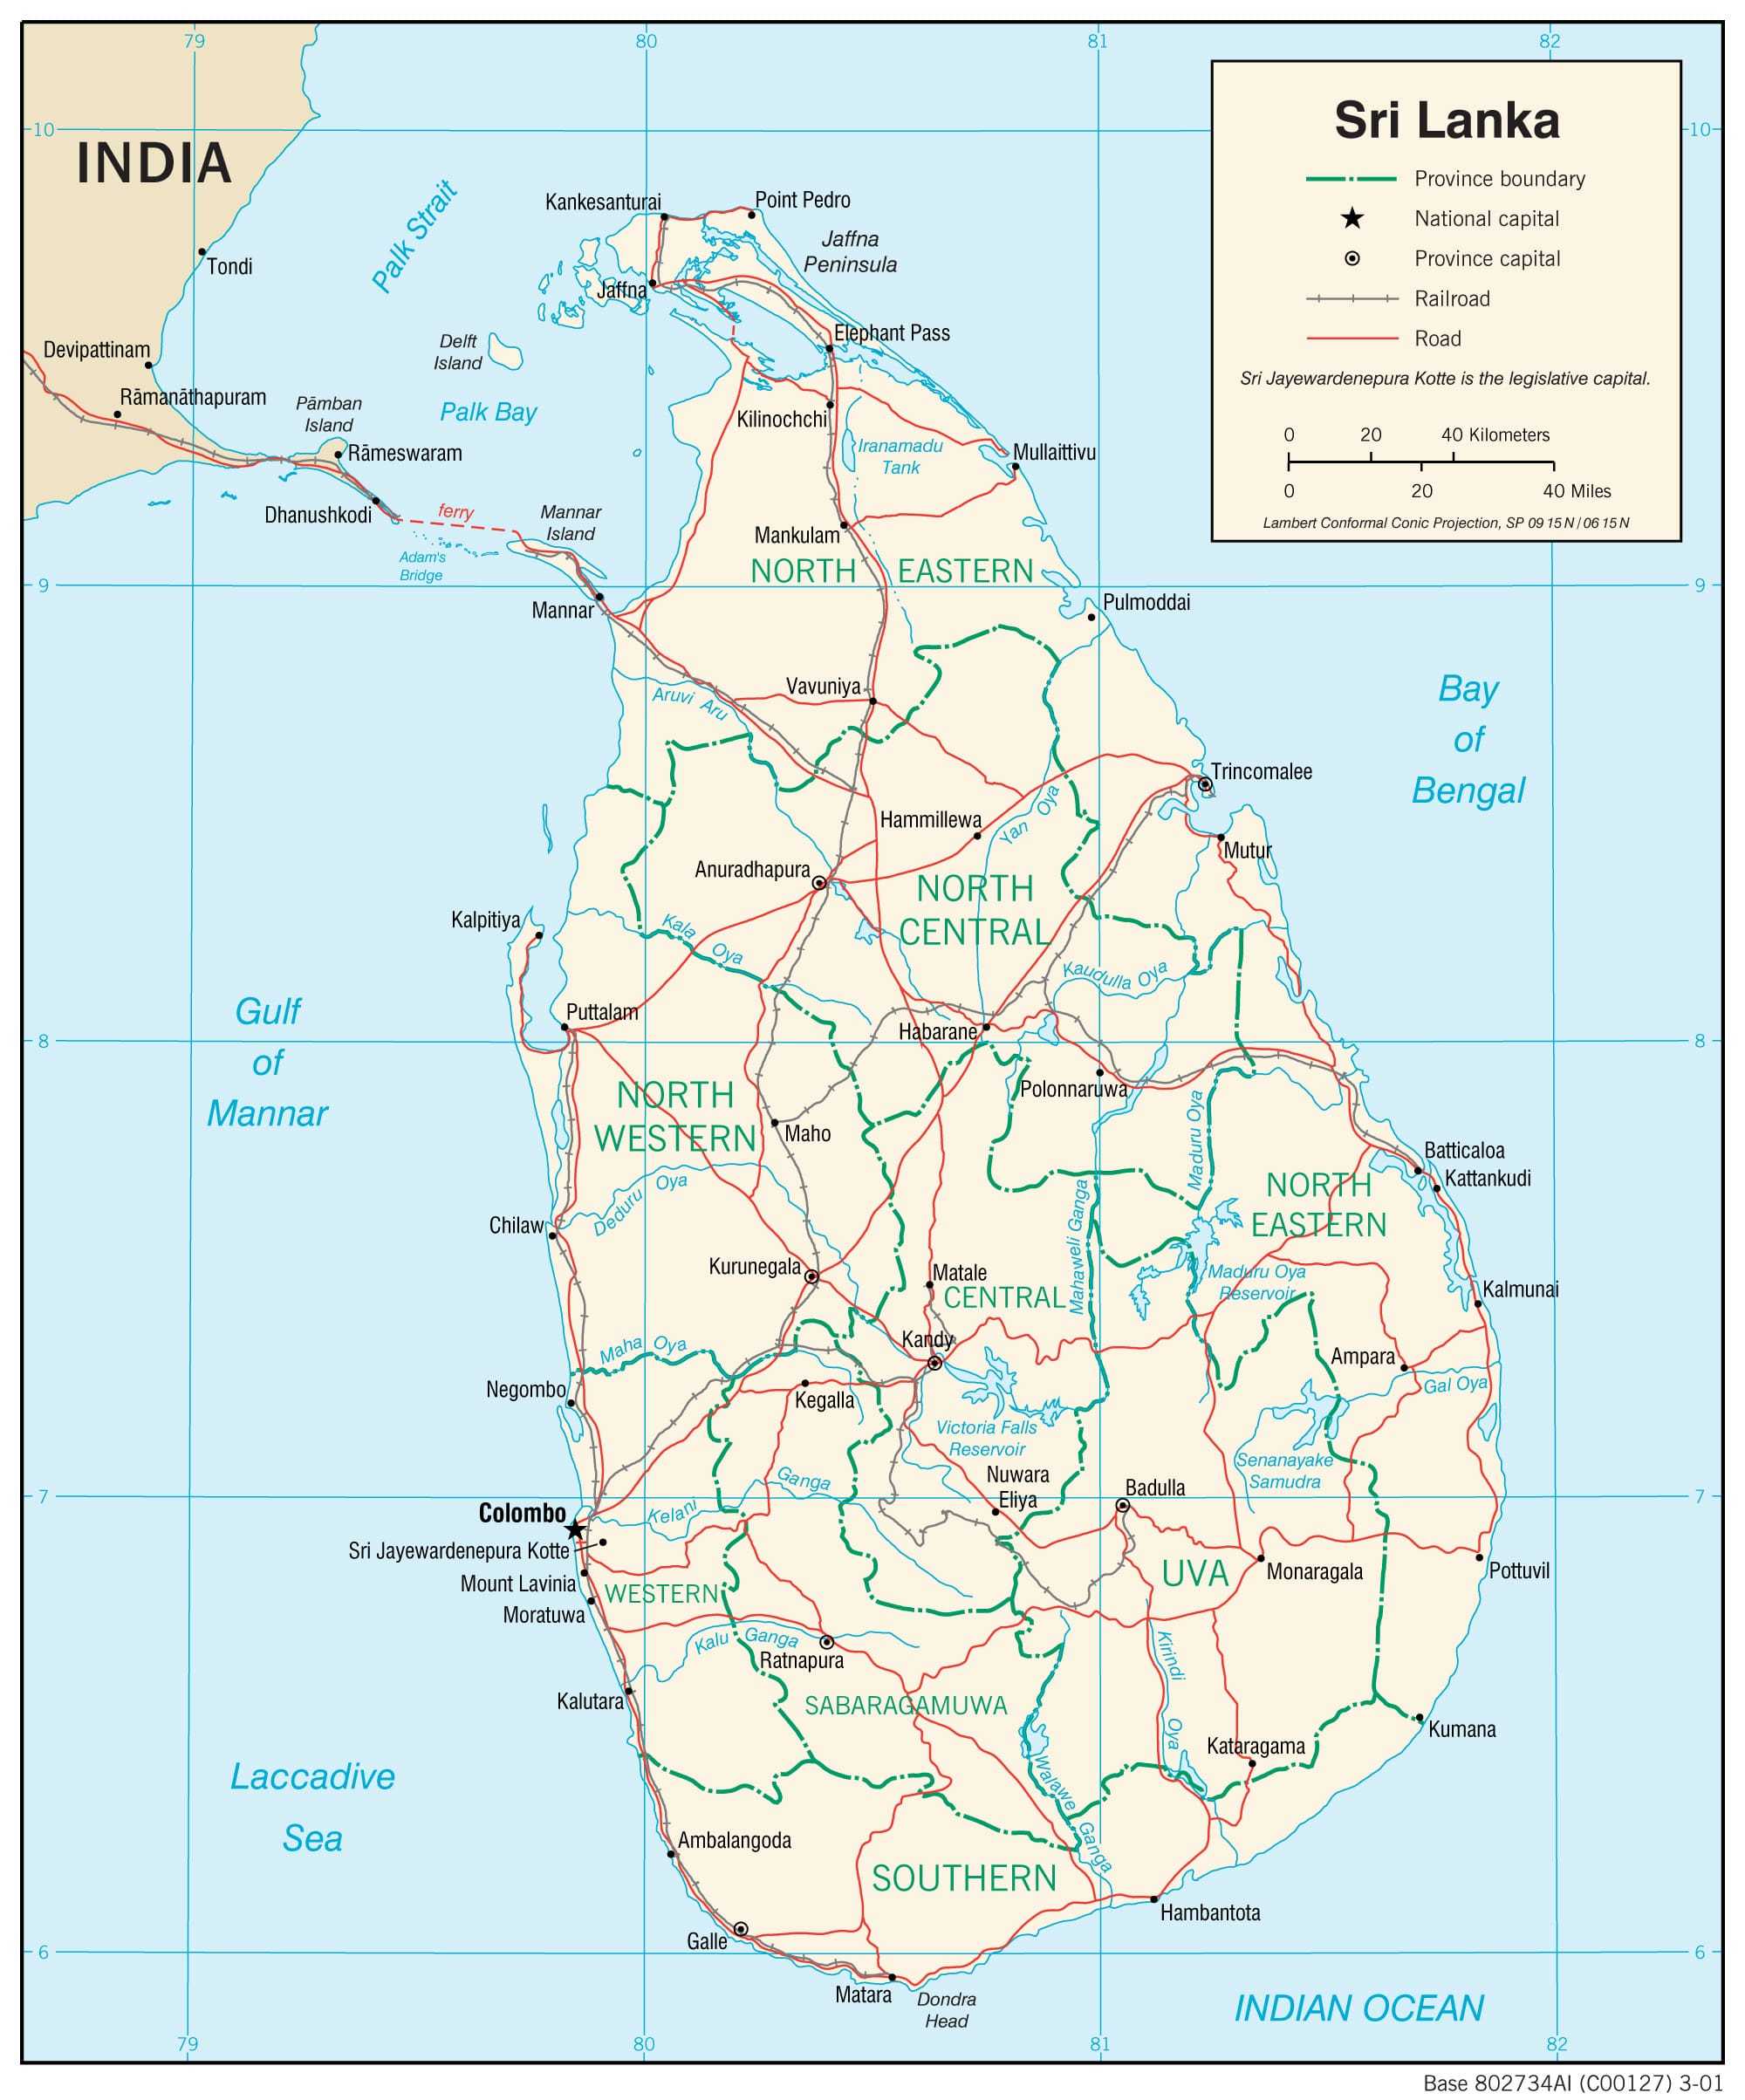 Transportation map of Sri Lanka.